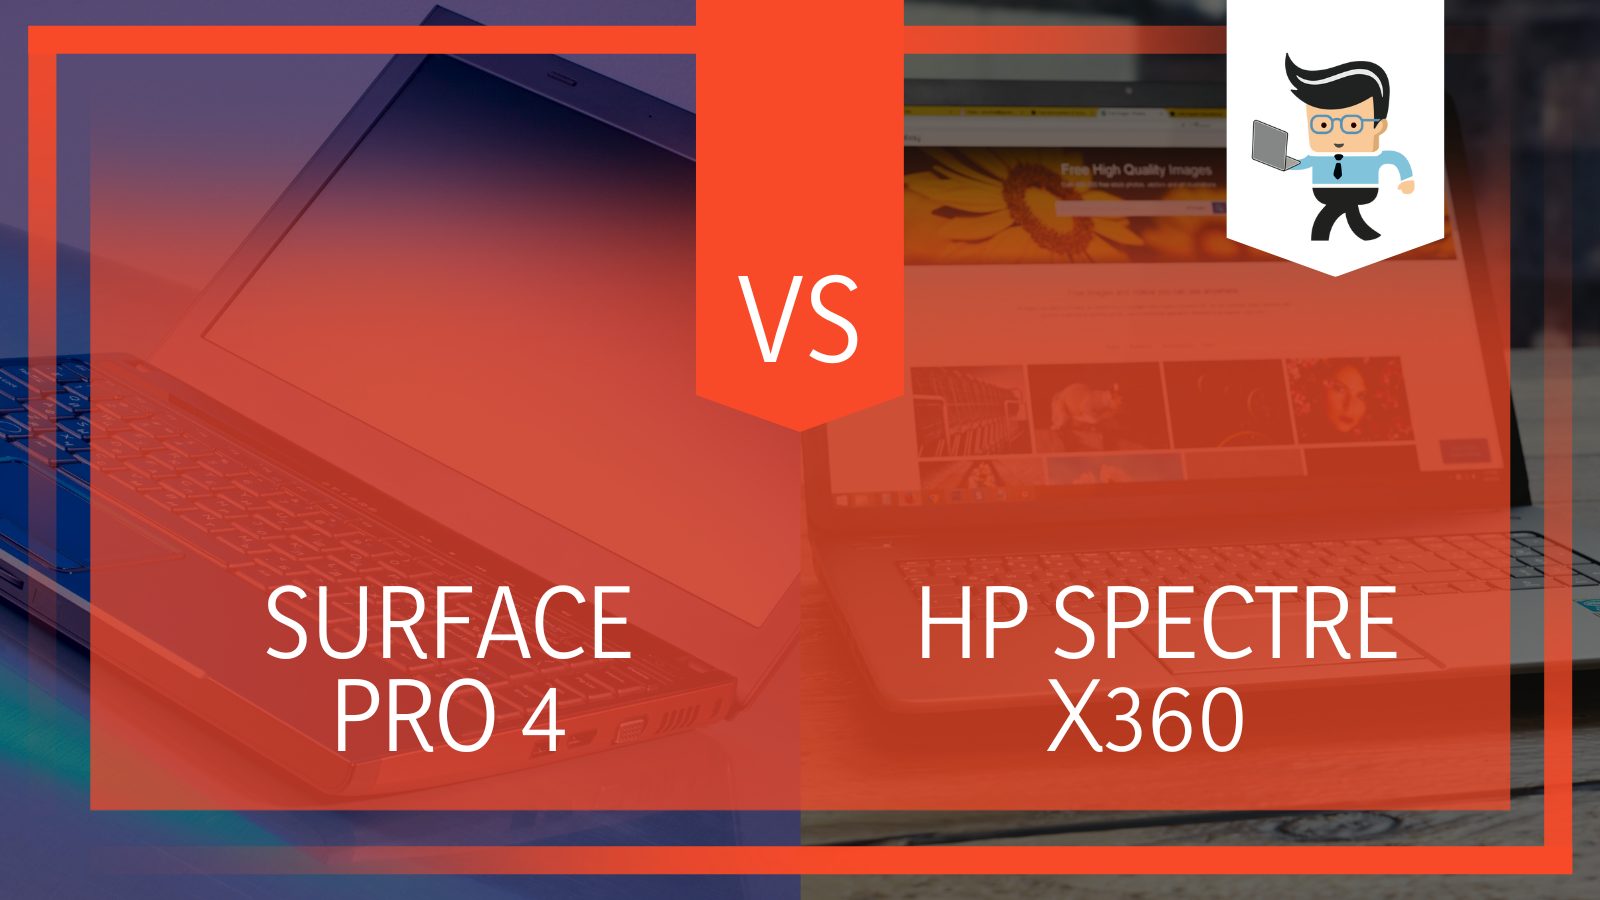 Microsoft Surface Pro 4 vs HP Spectre x360